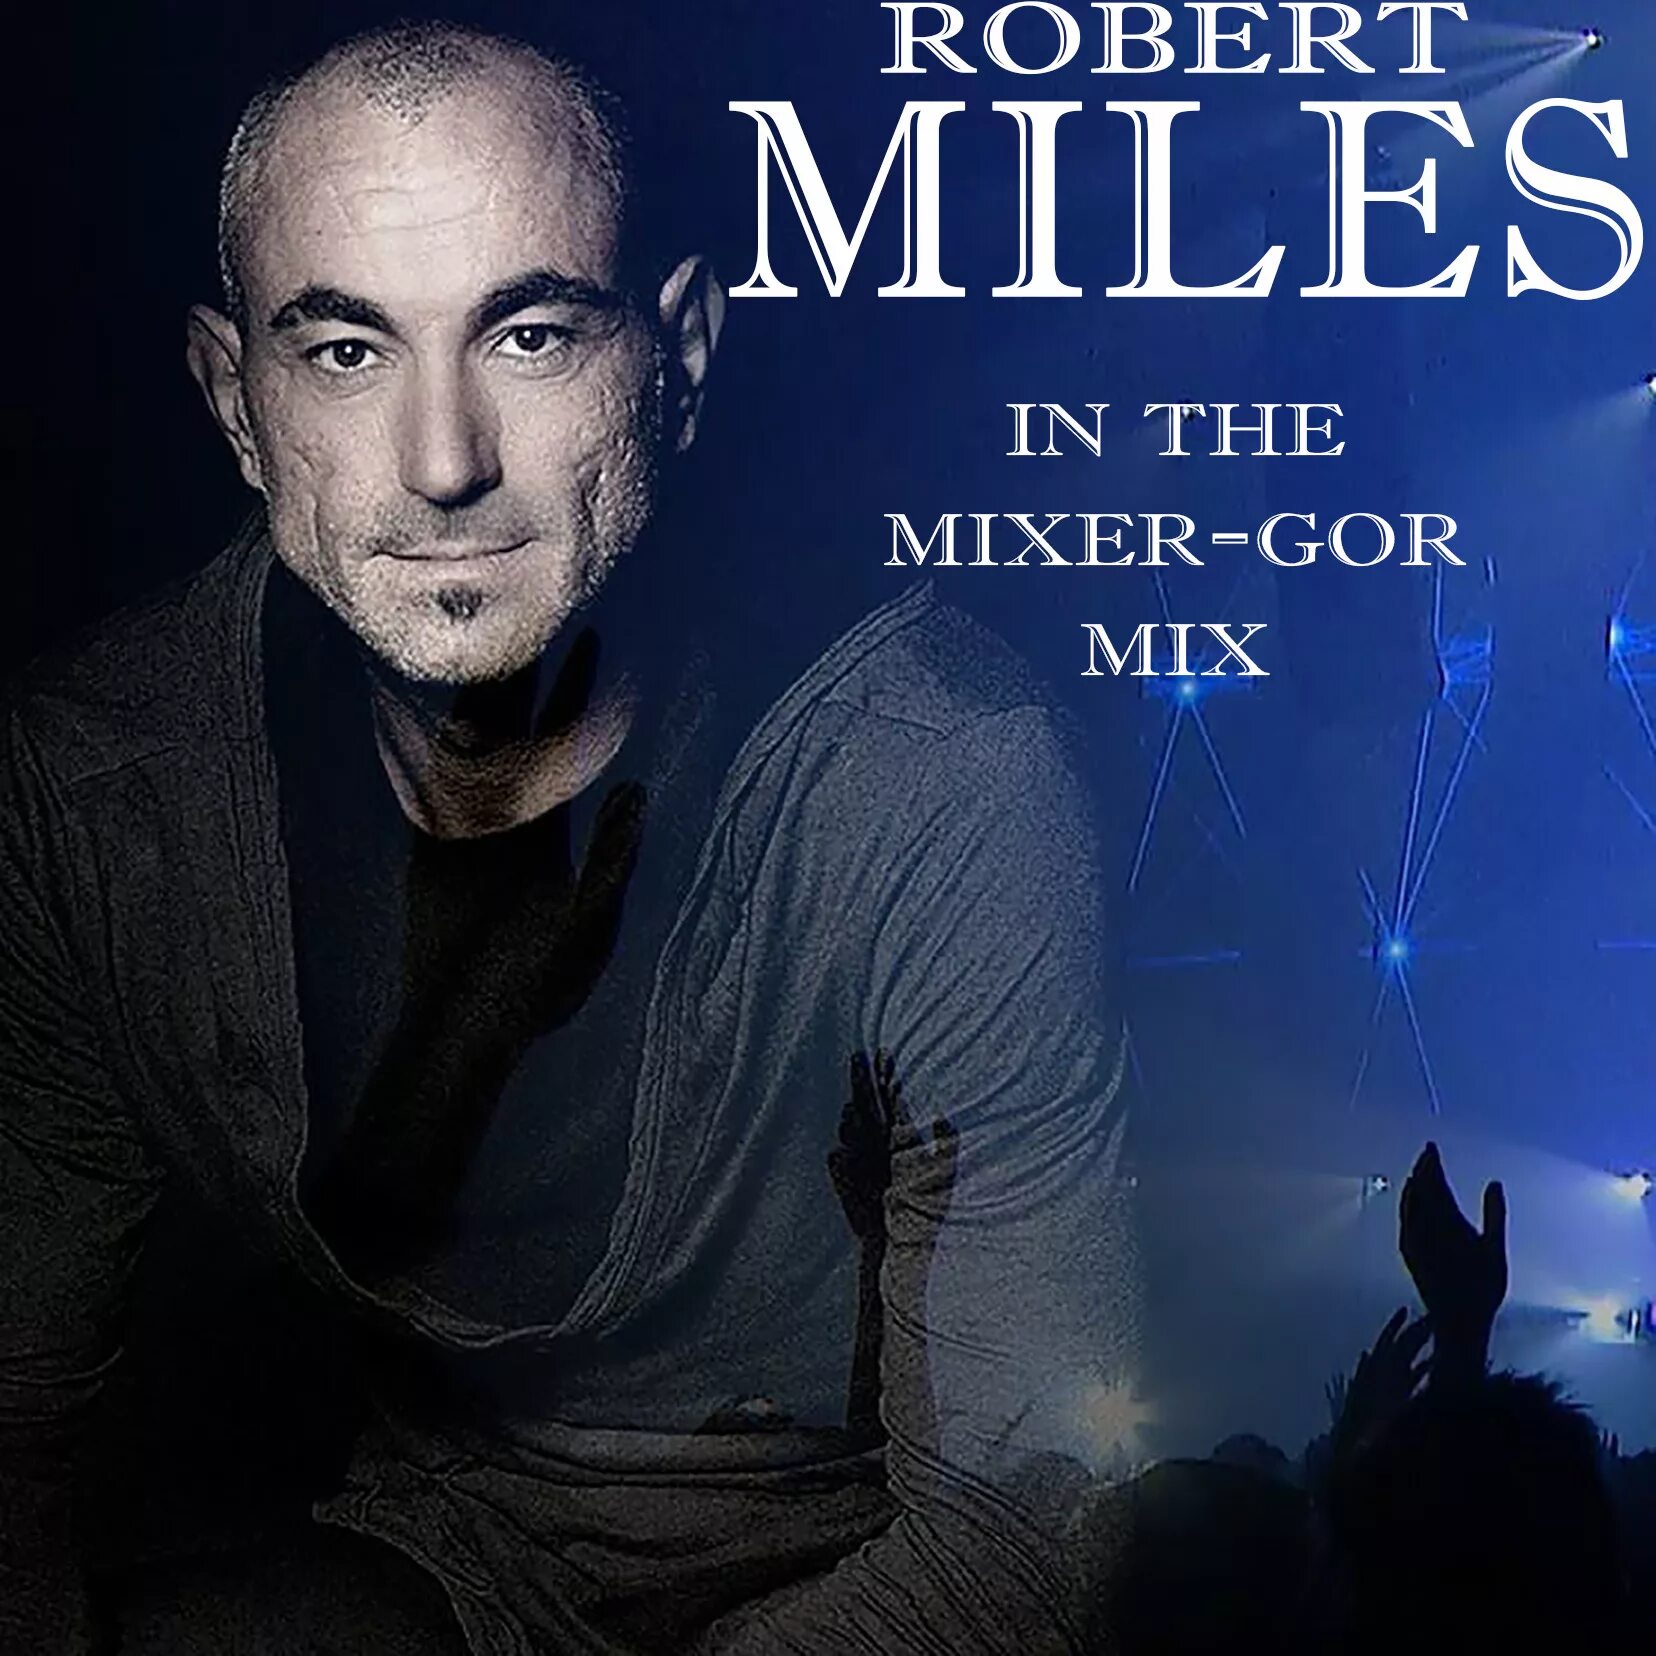 Robert Miles. Robert Miles 2017. Robert Miles 2011. Robert miles remix